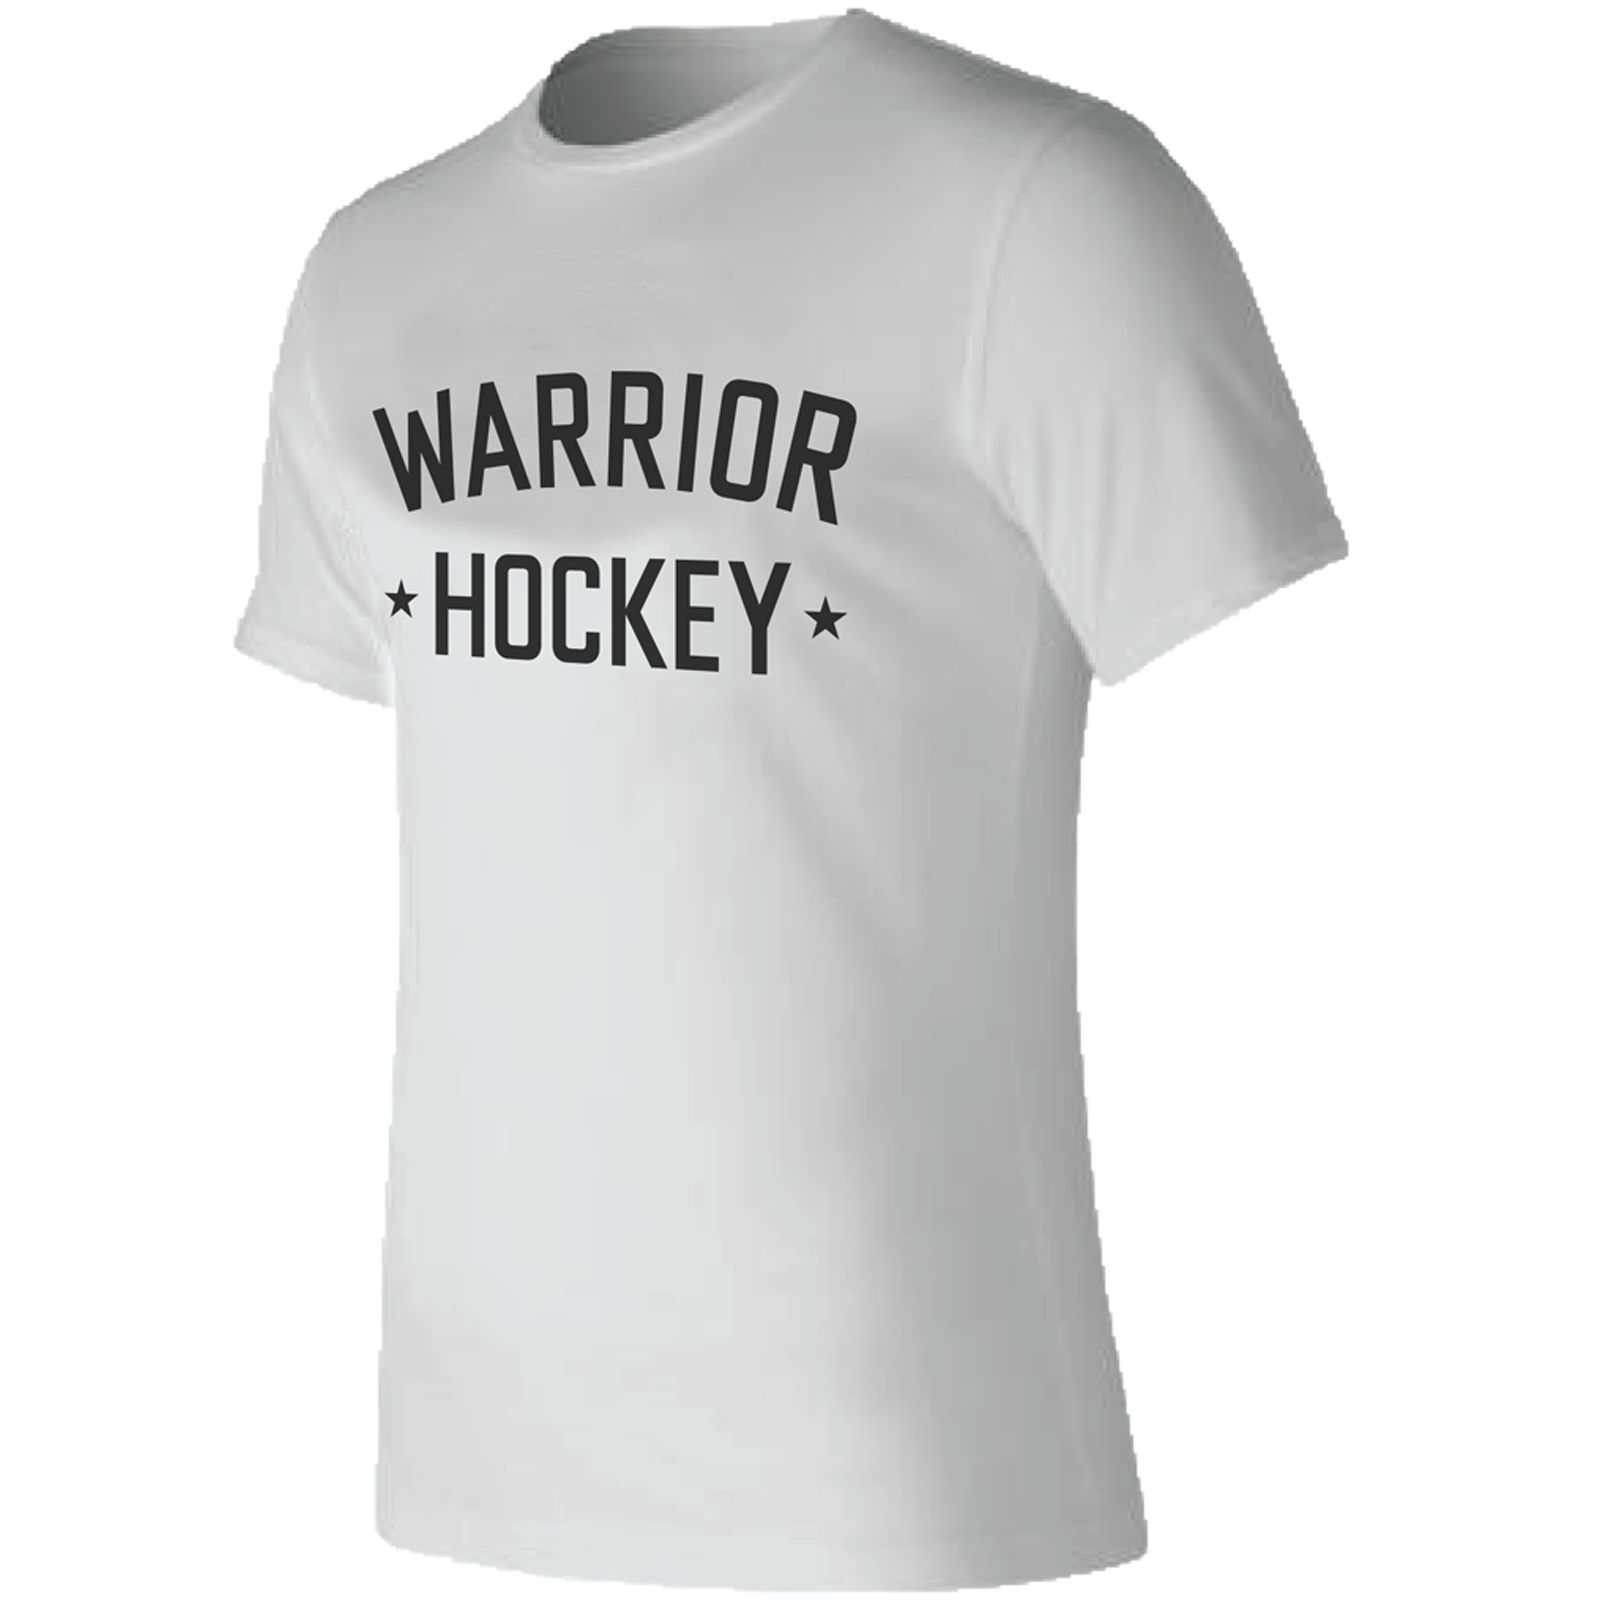 Warrior Hockey Street Tee, White image number 0